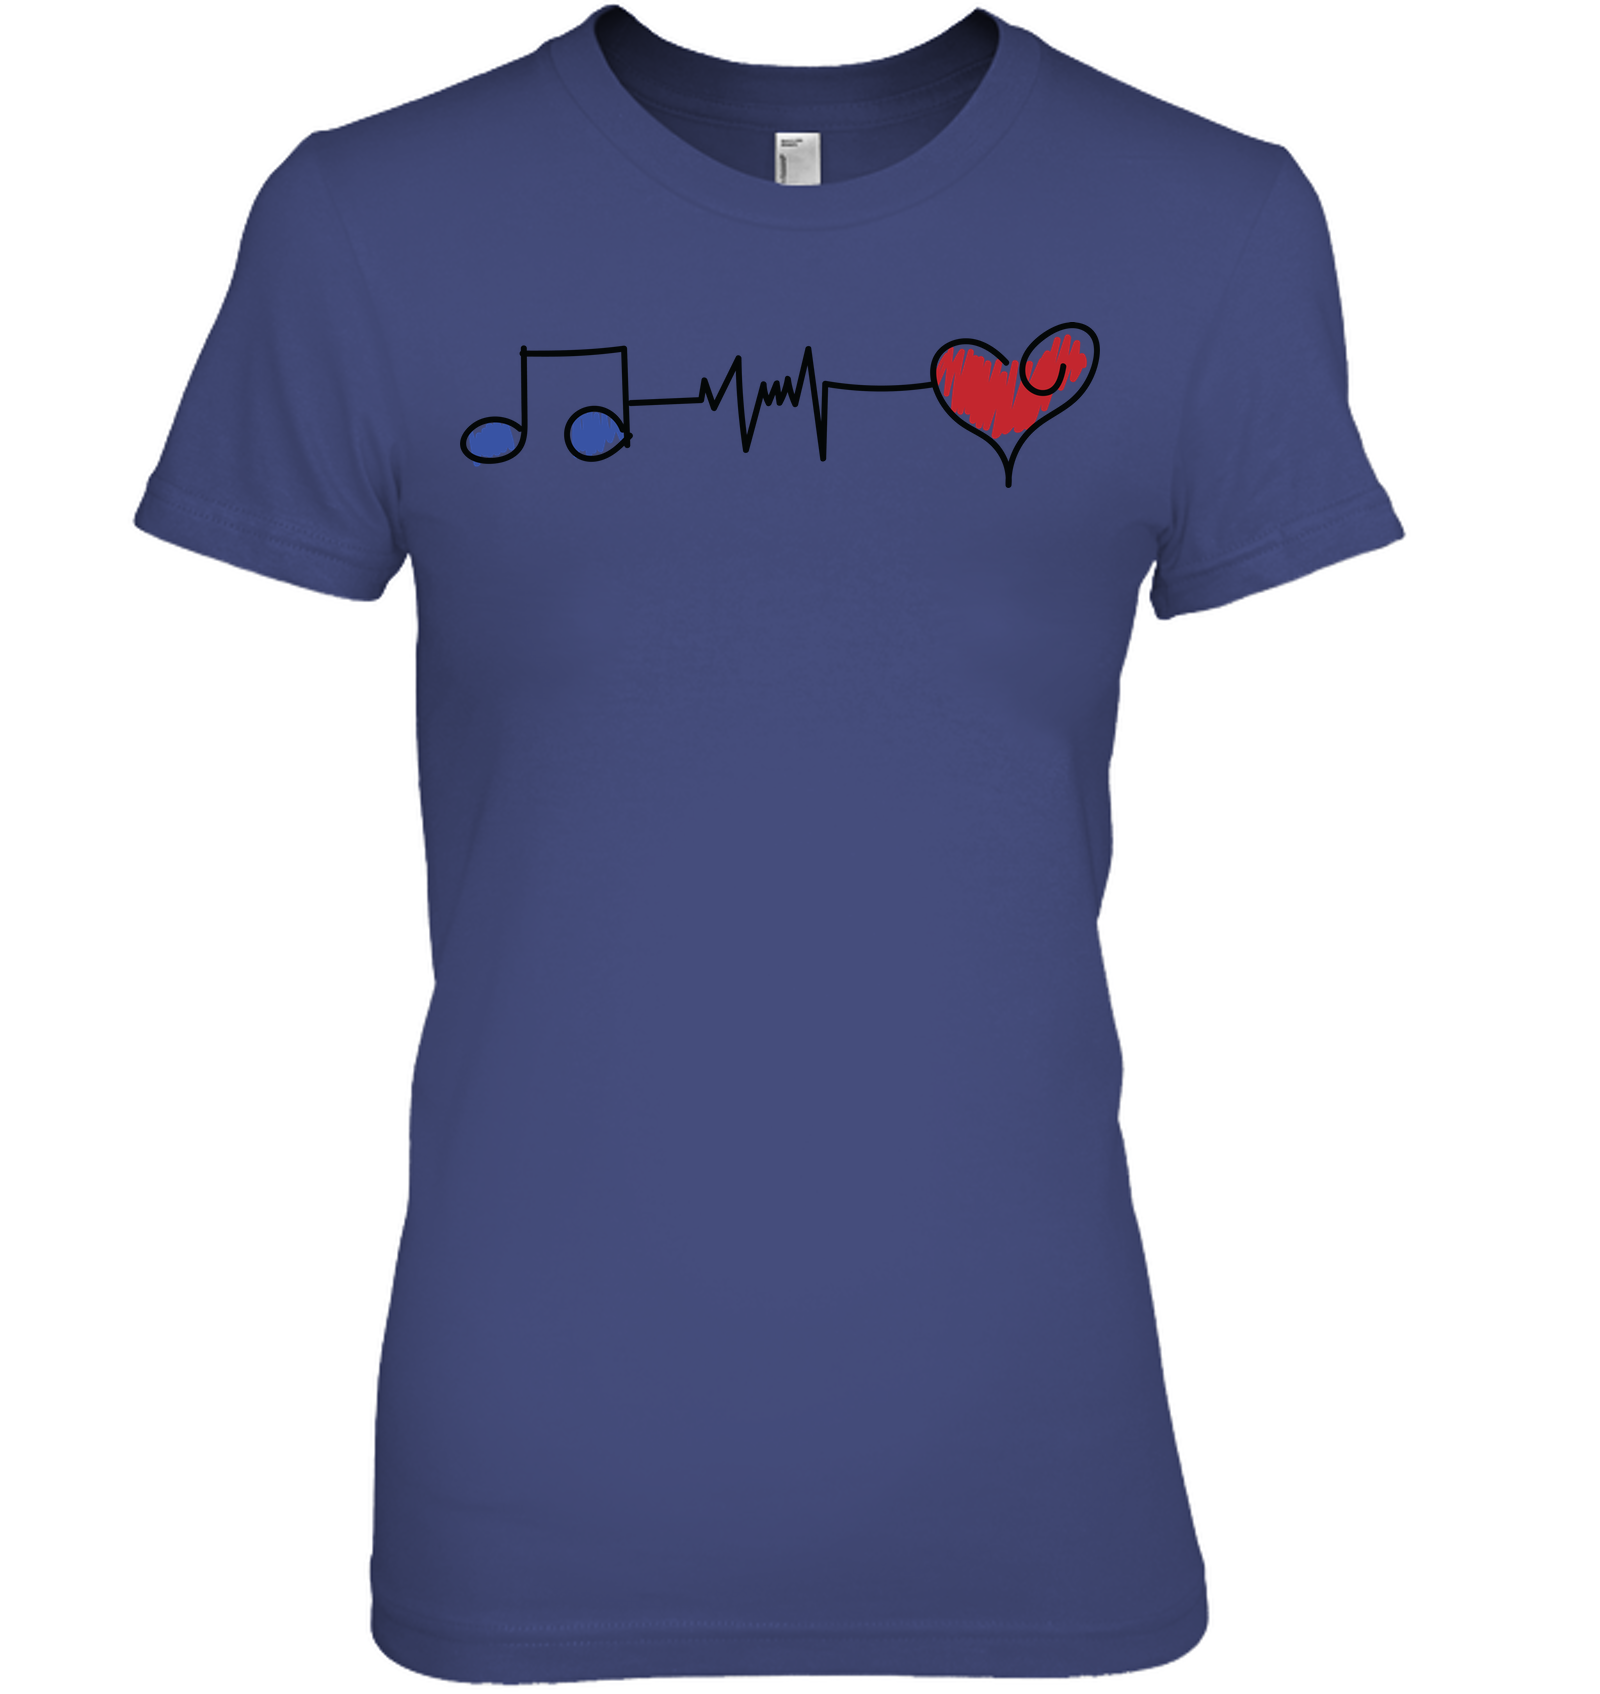 Musical Connections Blue - Hanes Women's Nano-T® T-Shirt